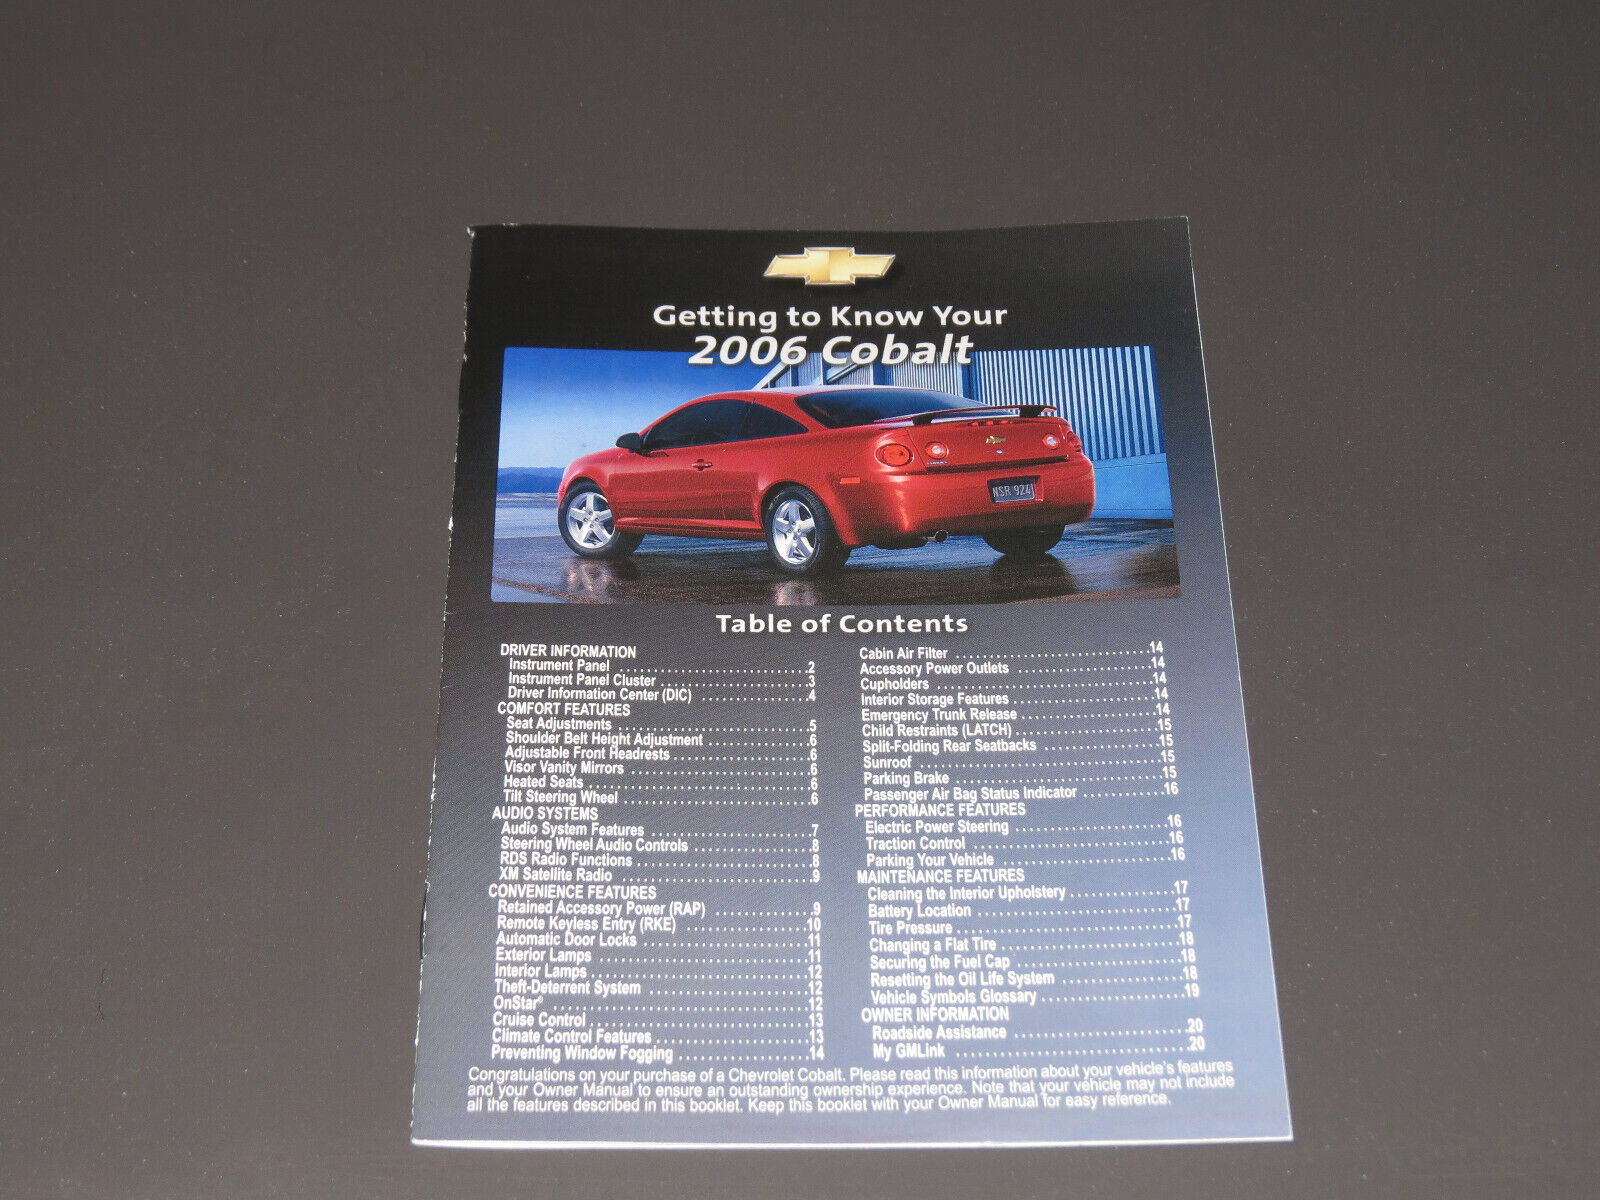 Original 2006 Chevrolet Cobalt Getting To Know Your 2006 Cobalt Pamphlet